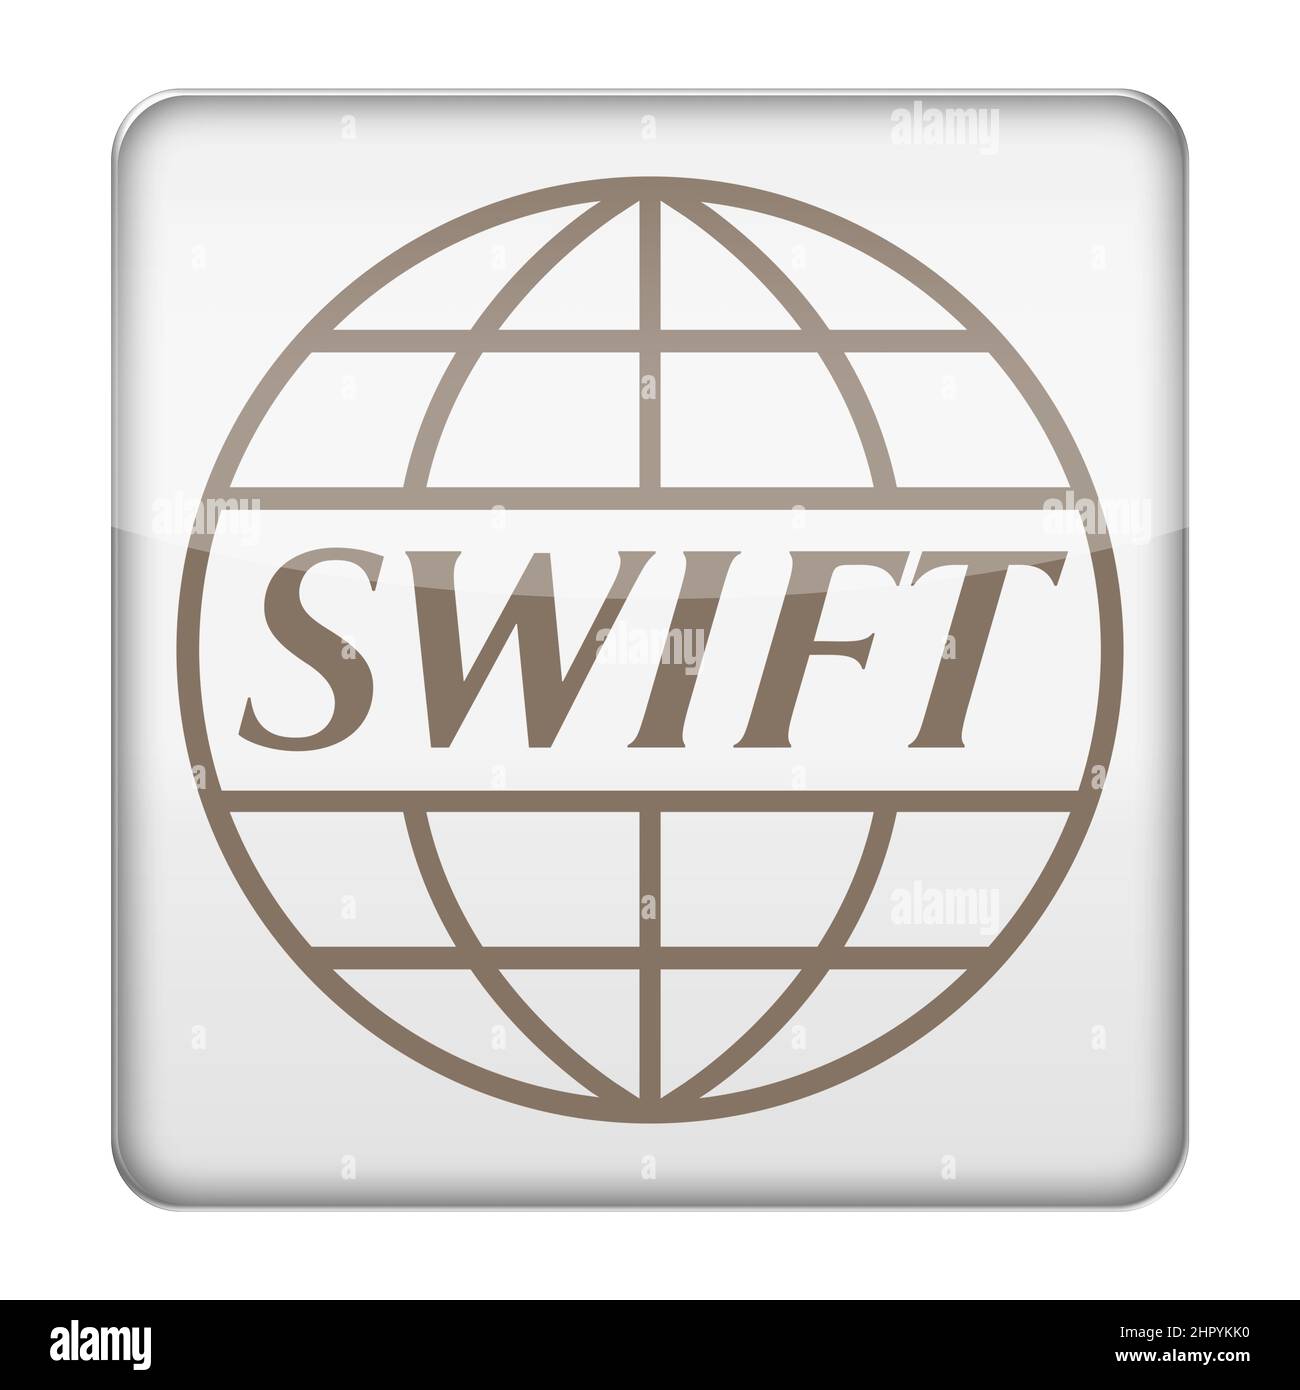 Swift - Society for Worldwide Interbank Financial Telecommunication logo Stock Photo